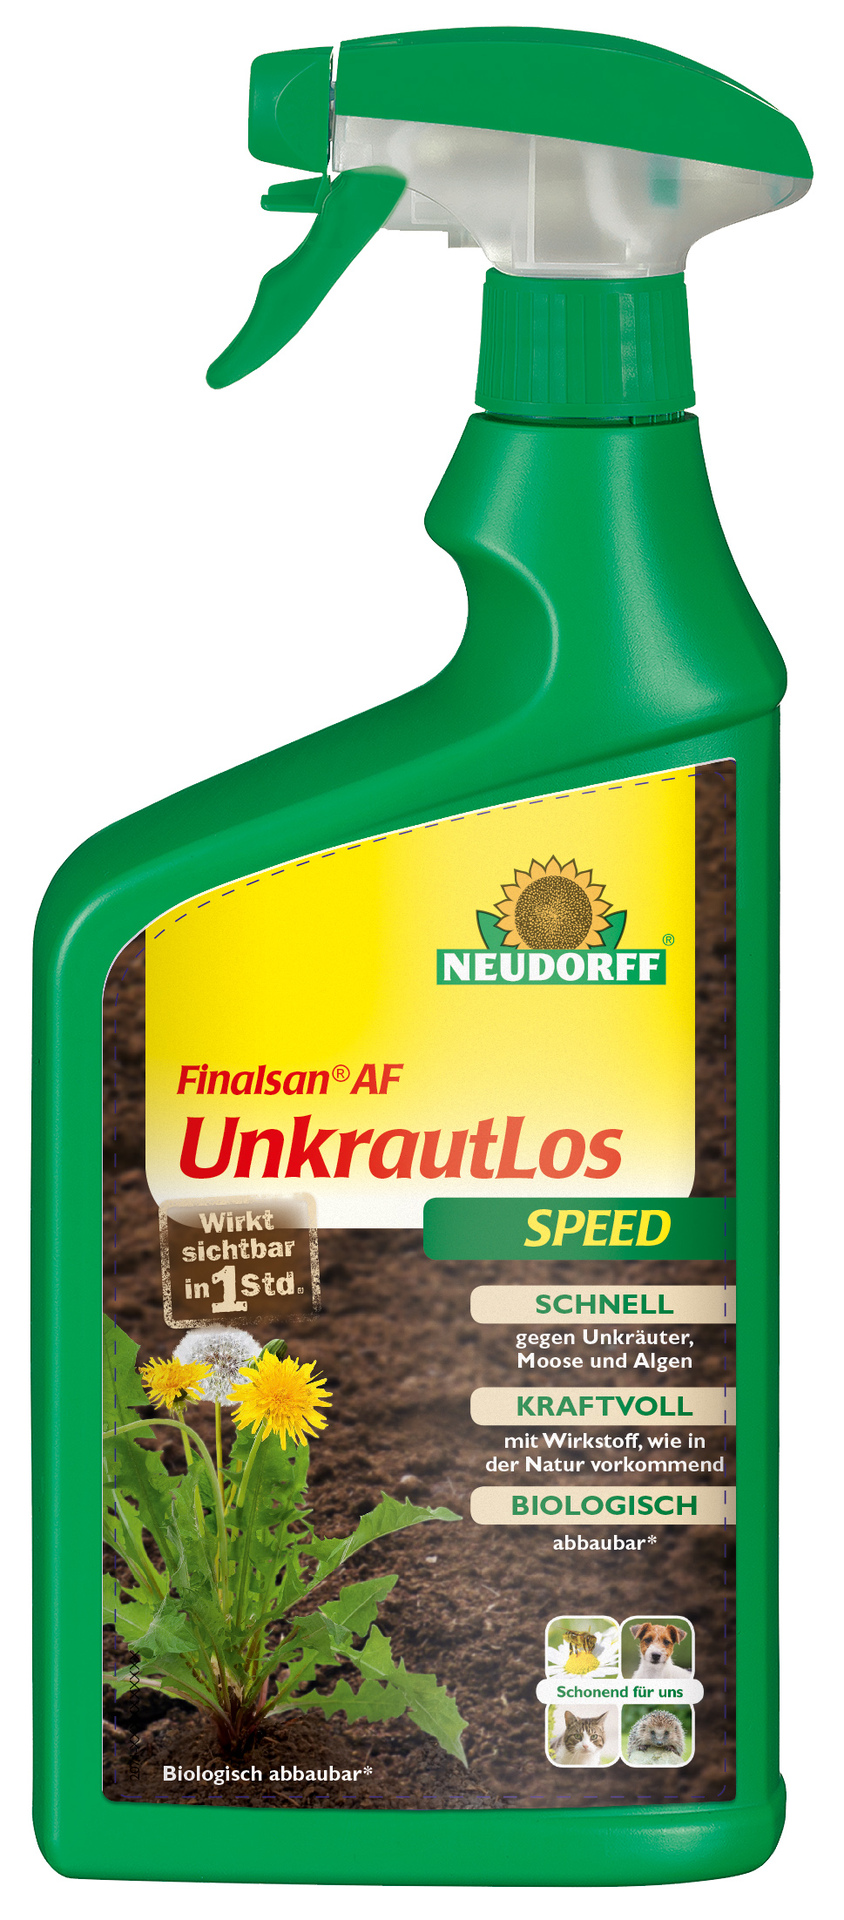 Finalsan AF UnkrautLos Speed